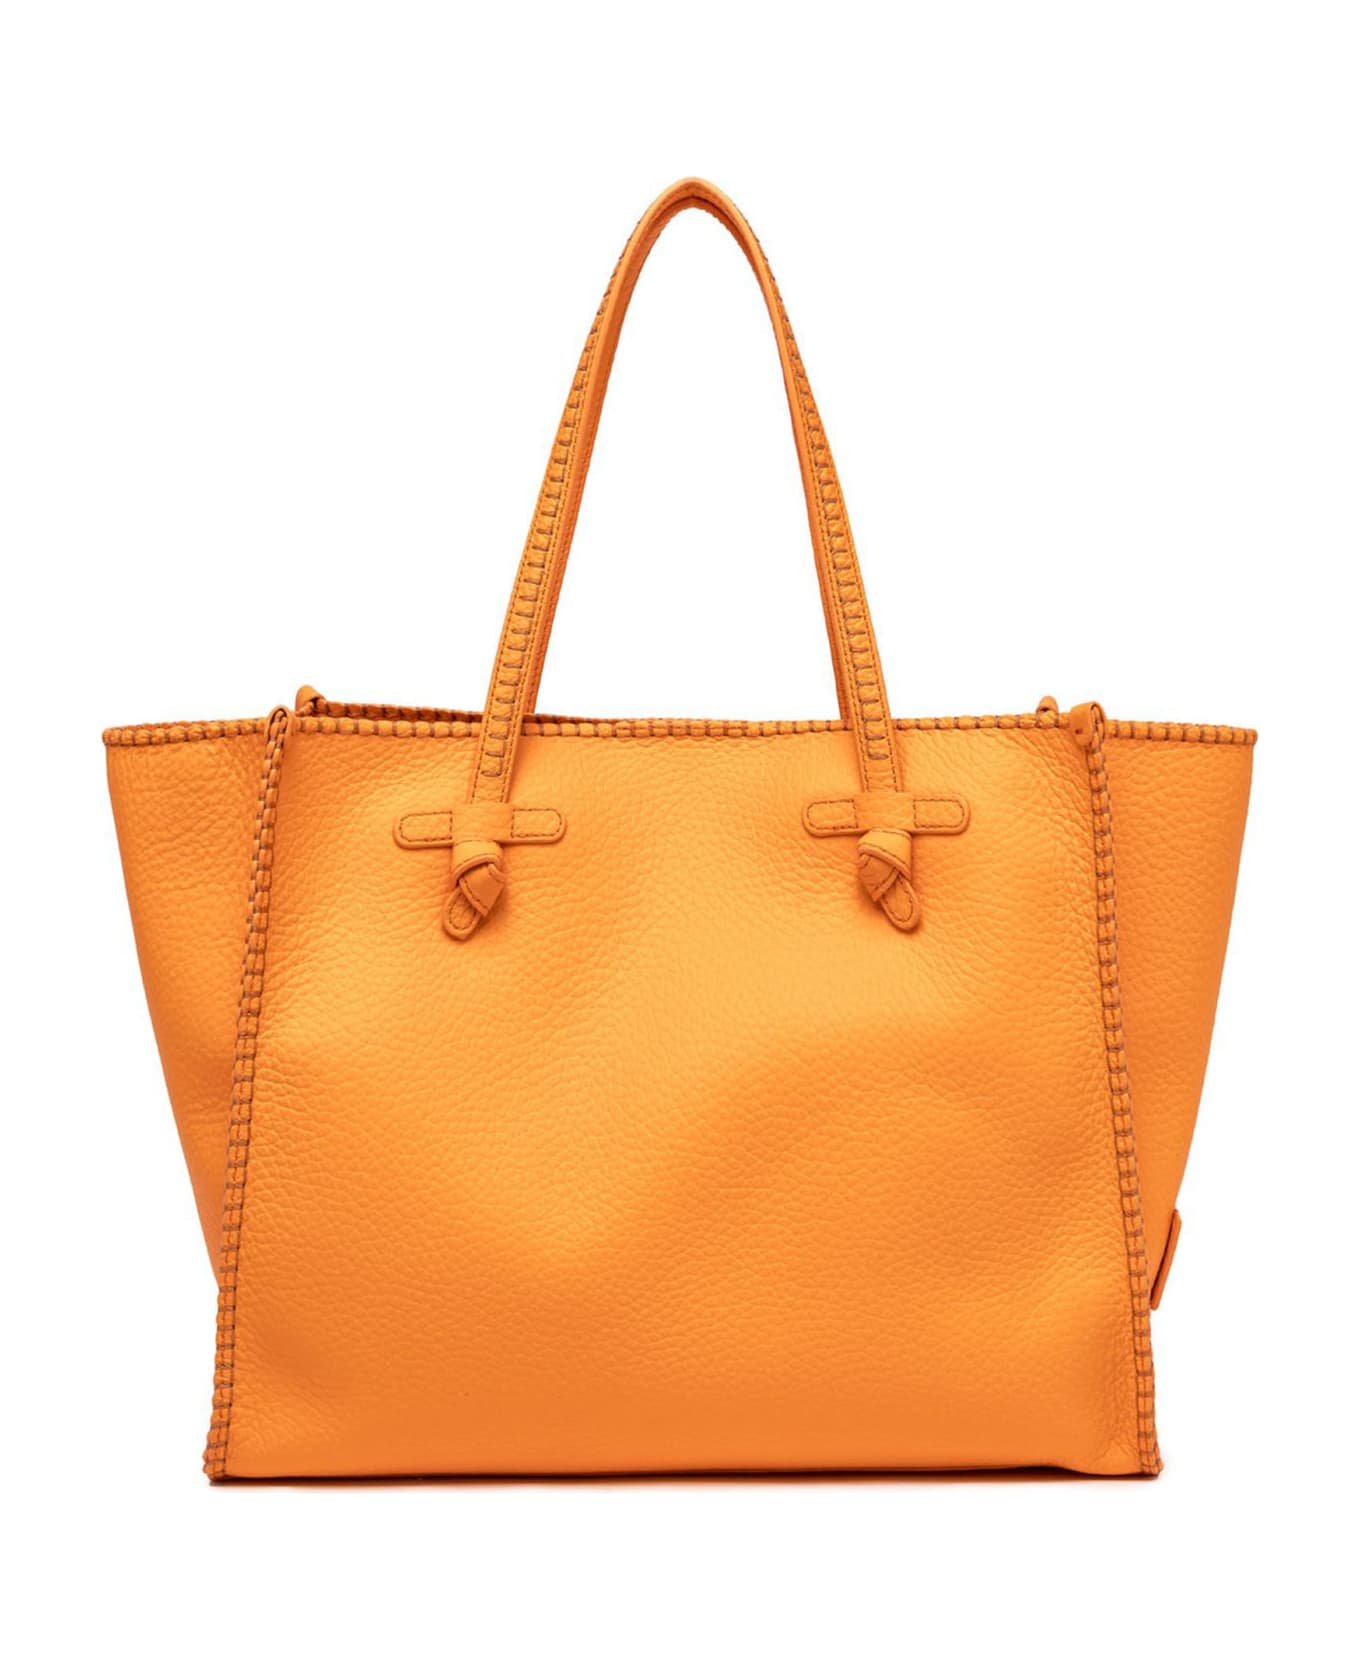 Gianni Chiarini Orange Soft Leather Shopping Bag - Orange